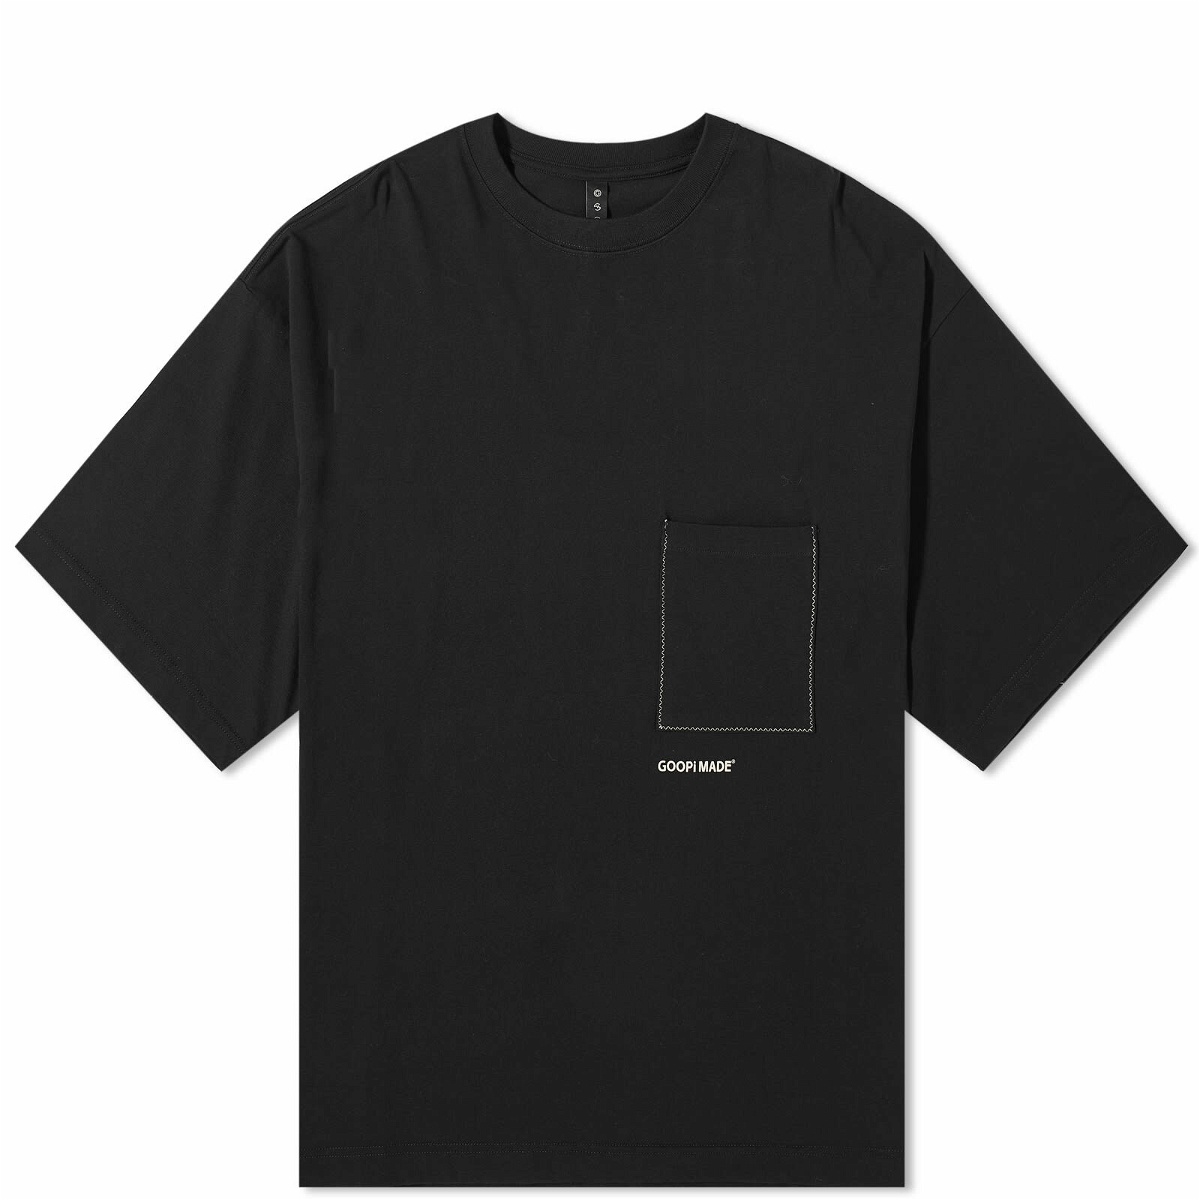 GOOPiMADE x Acrypsis Graphic T-Shirt in Black GOOPiMADE